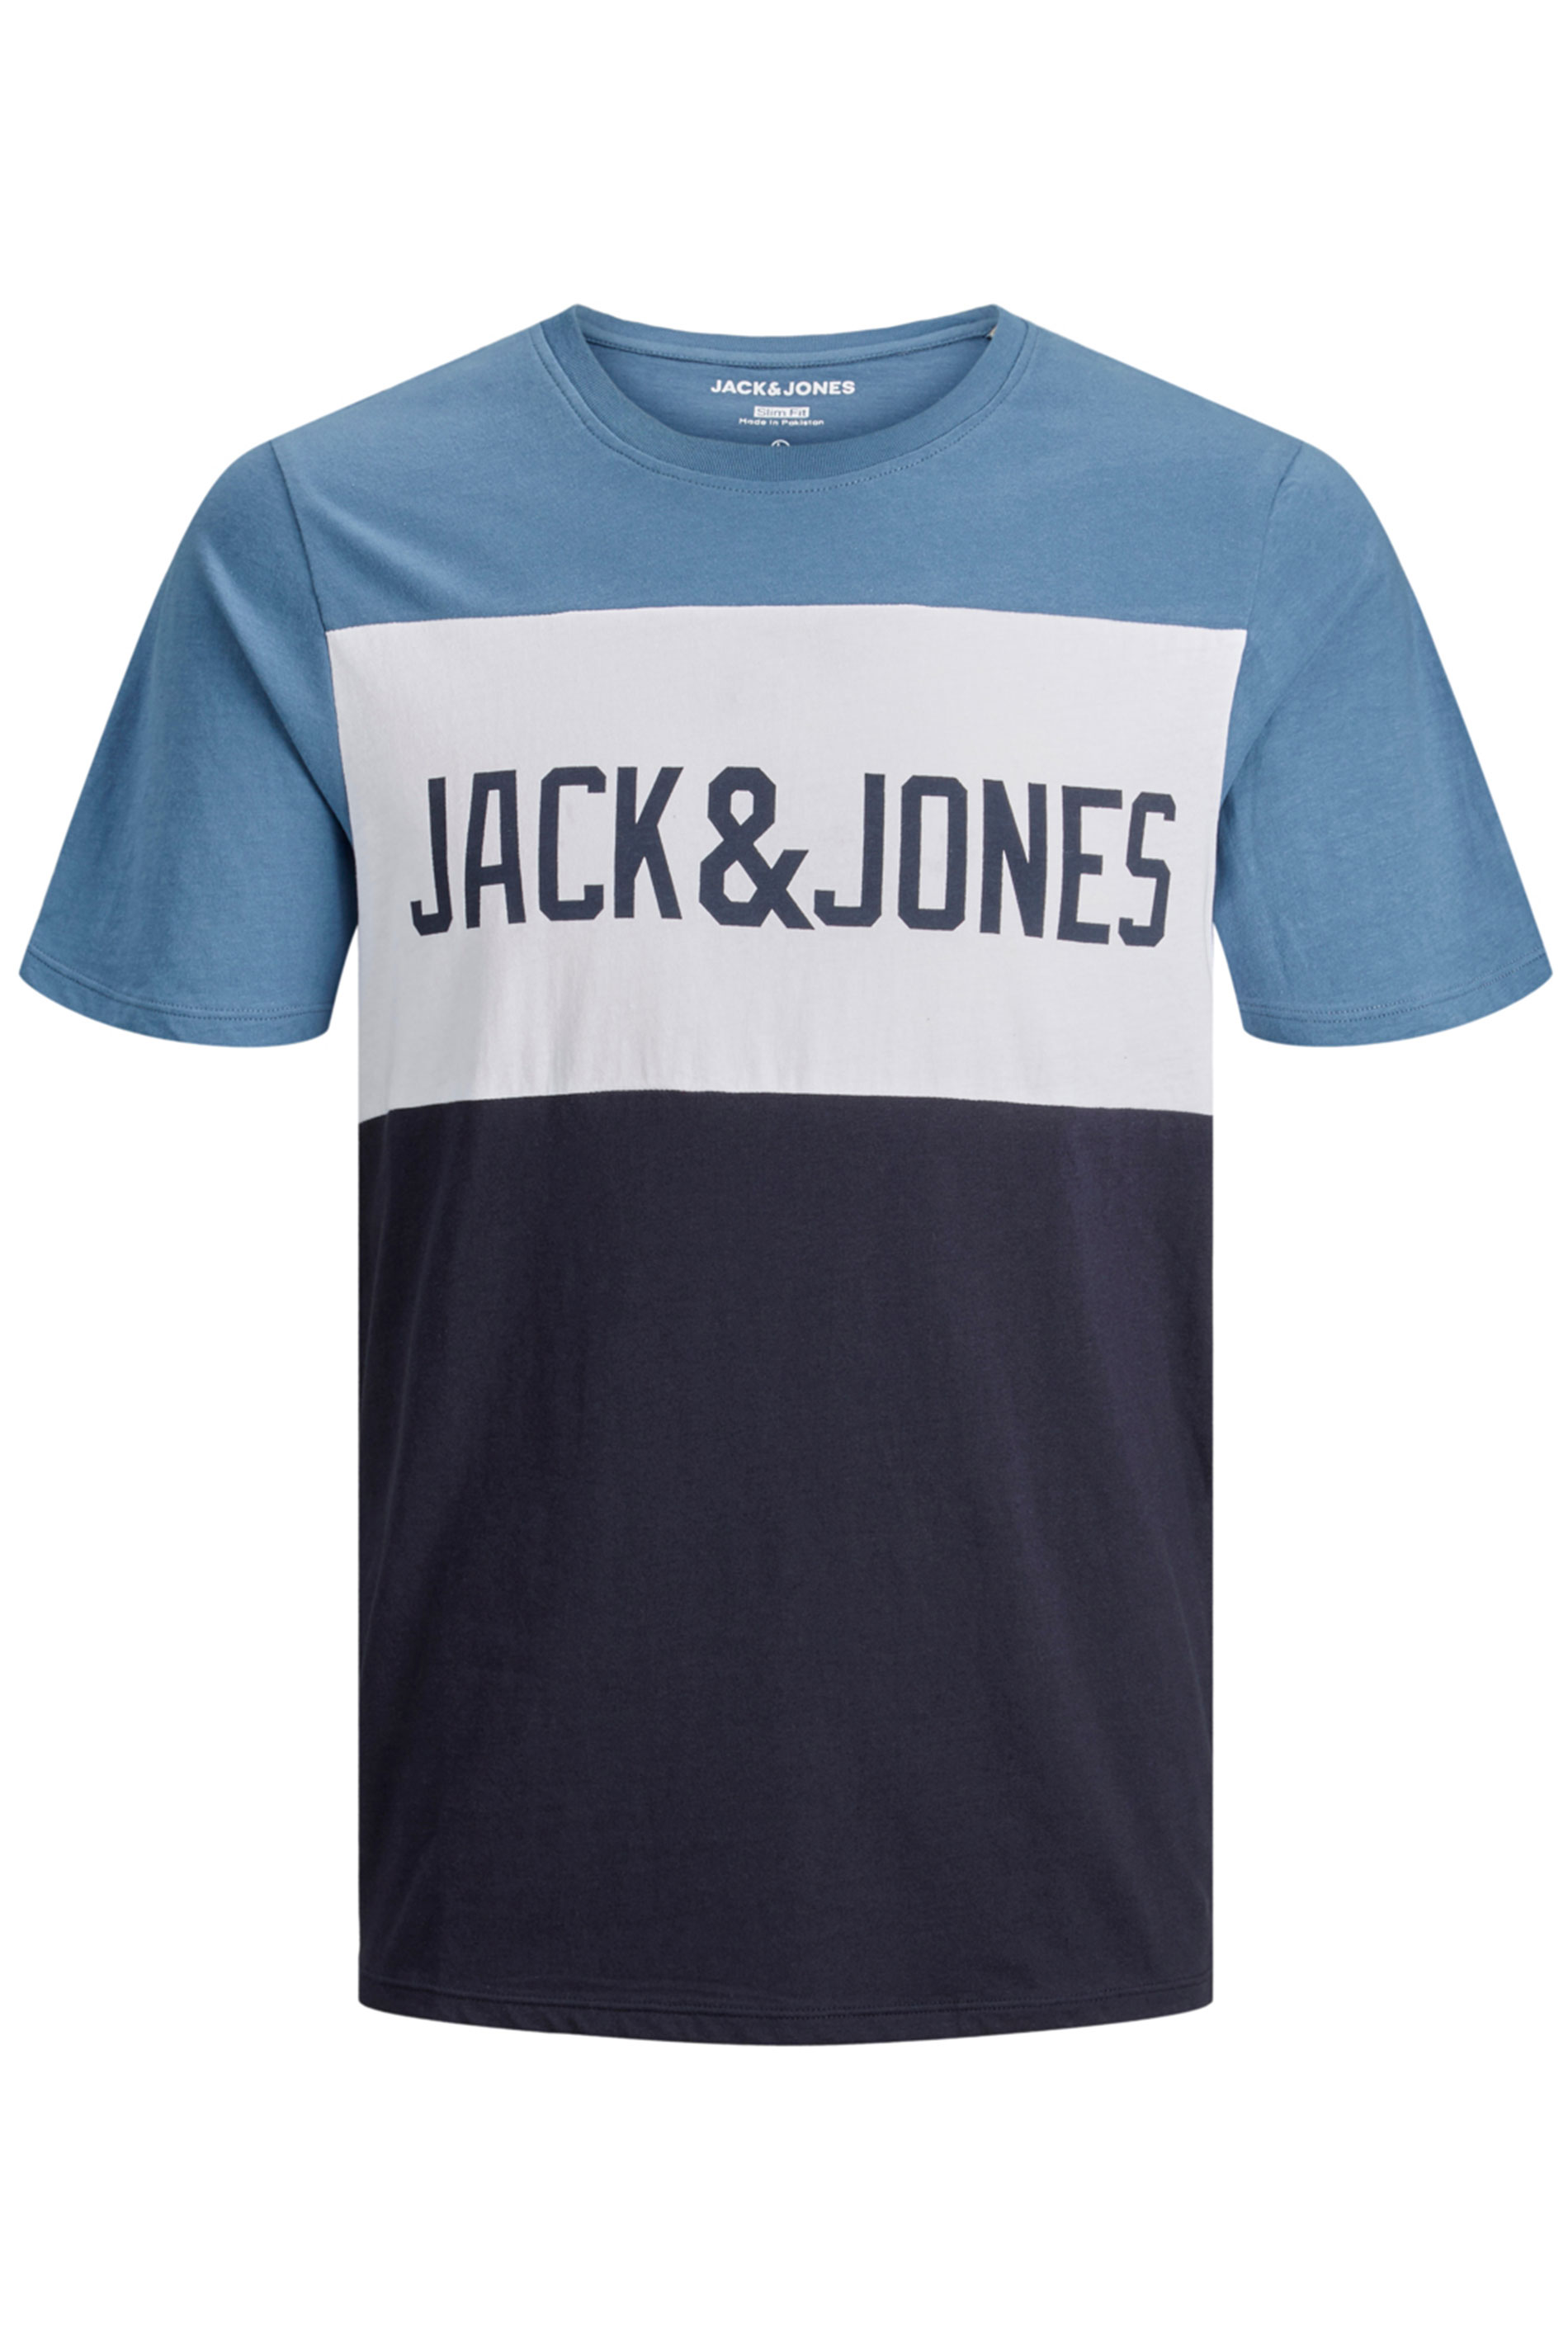 JACK & JONES Blue Colour Block Logo T-Shirt | BadRhino